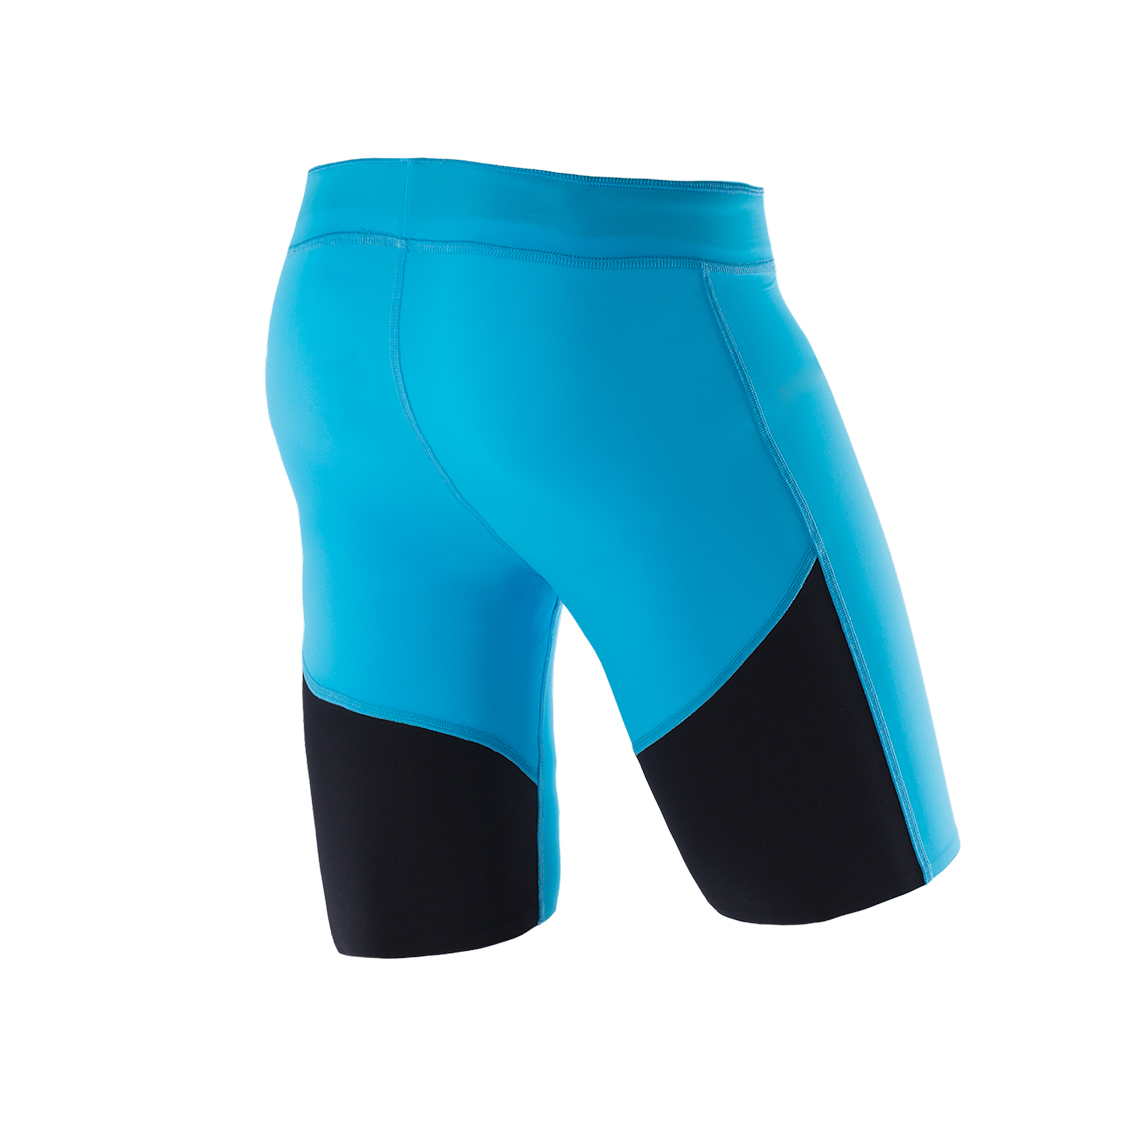 Men's Athletic Compression Shorts Blue - Zeropoint Compression